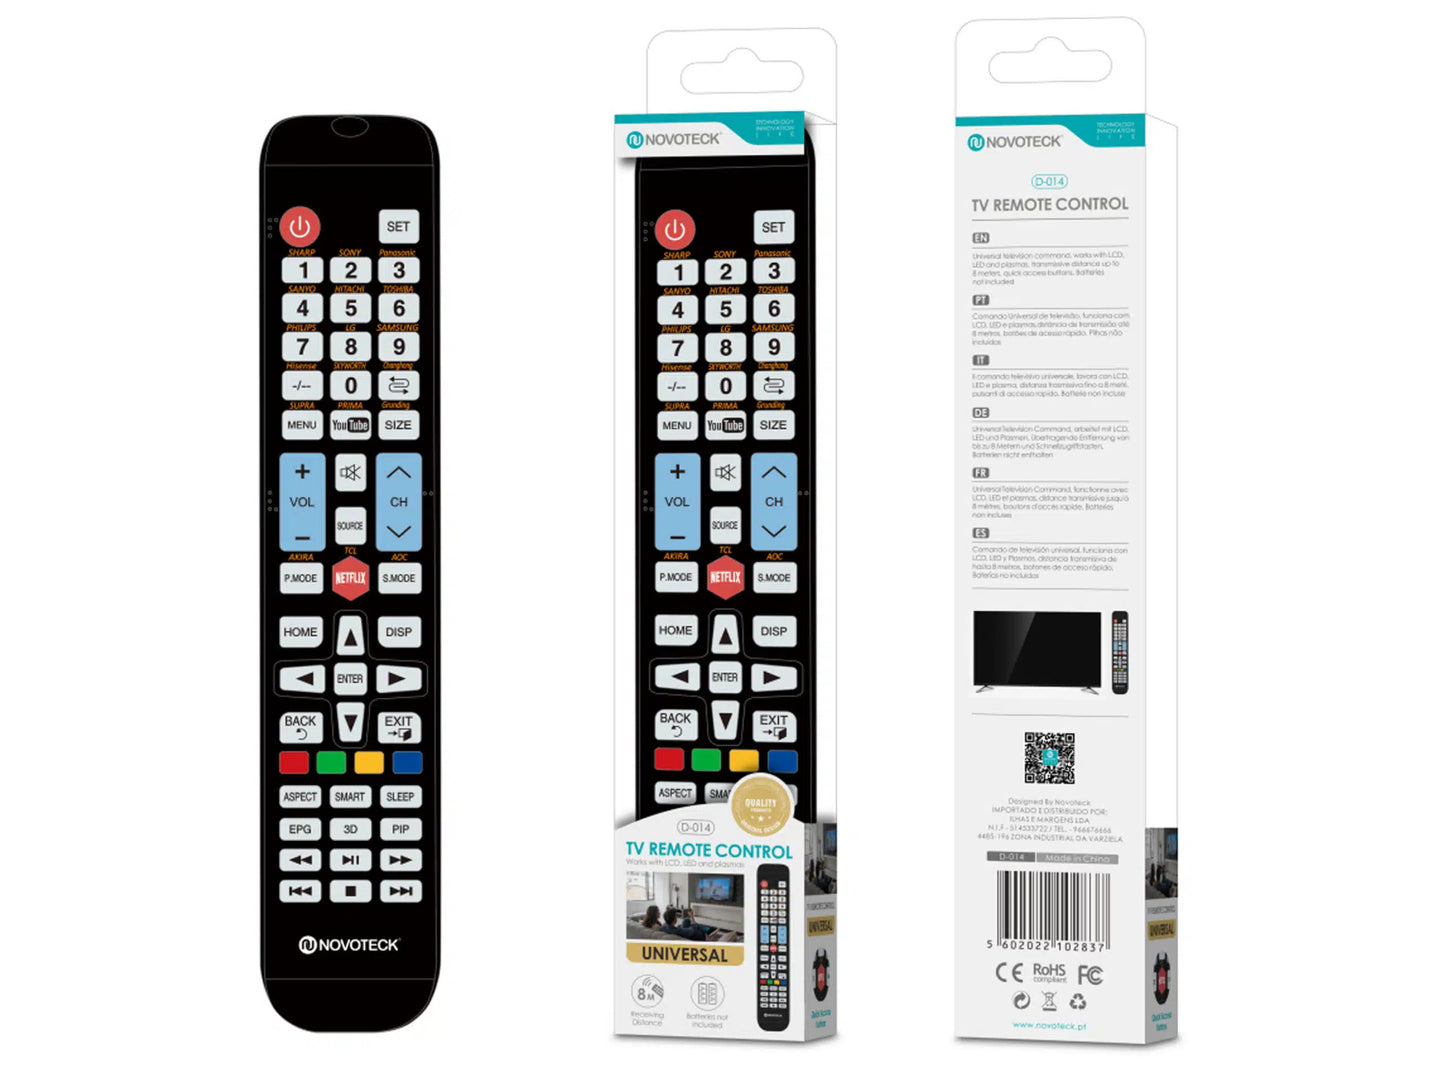 Controle Remoto Universal 15In1 Novoteck D-014 – Compatibilidade Expansiva e Teclas de Atalho para Netflix e YouTube